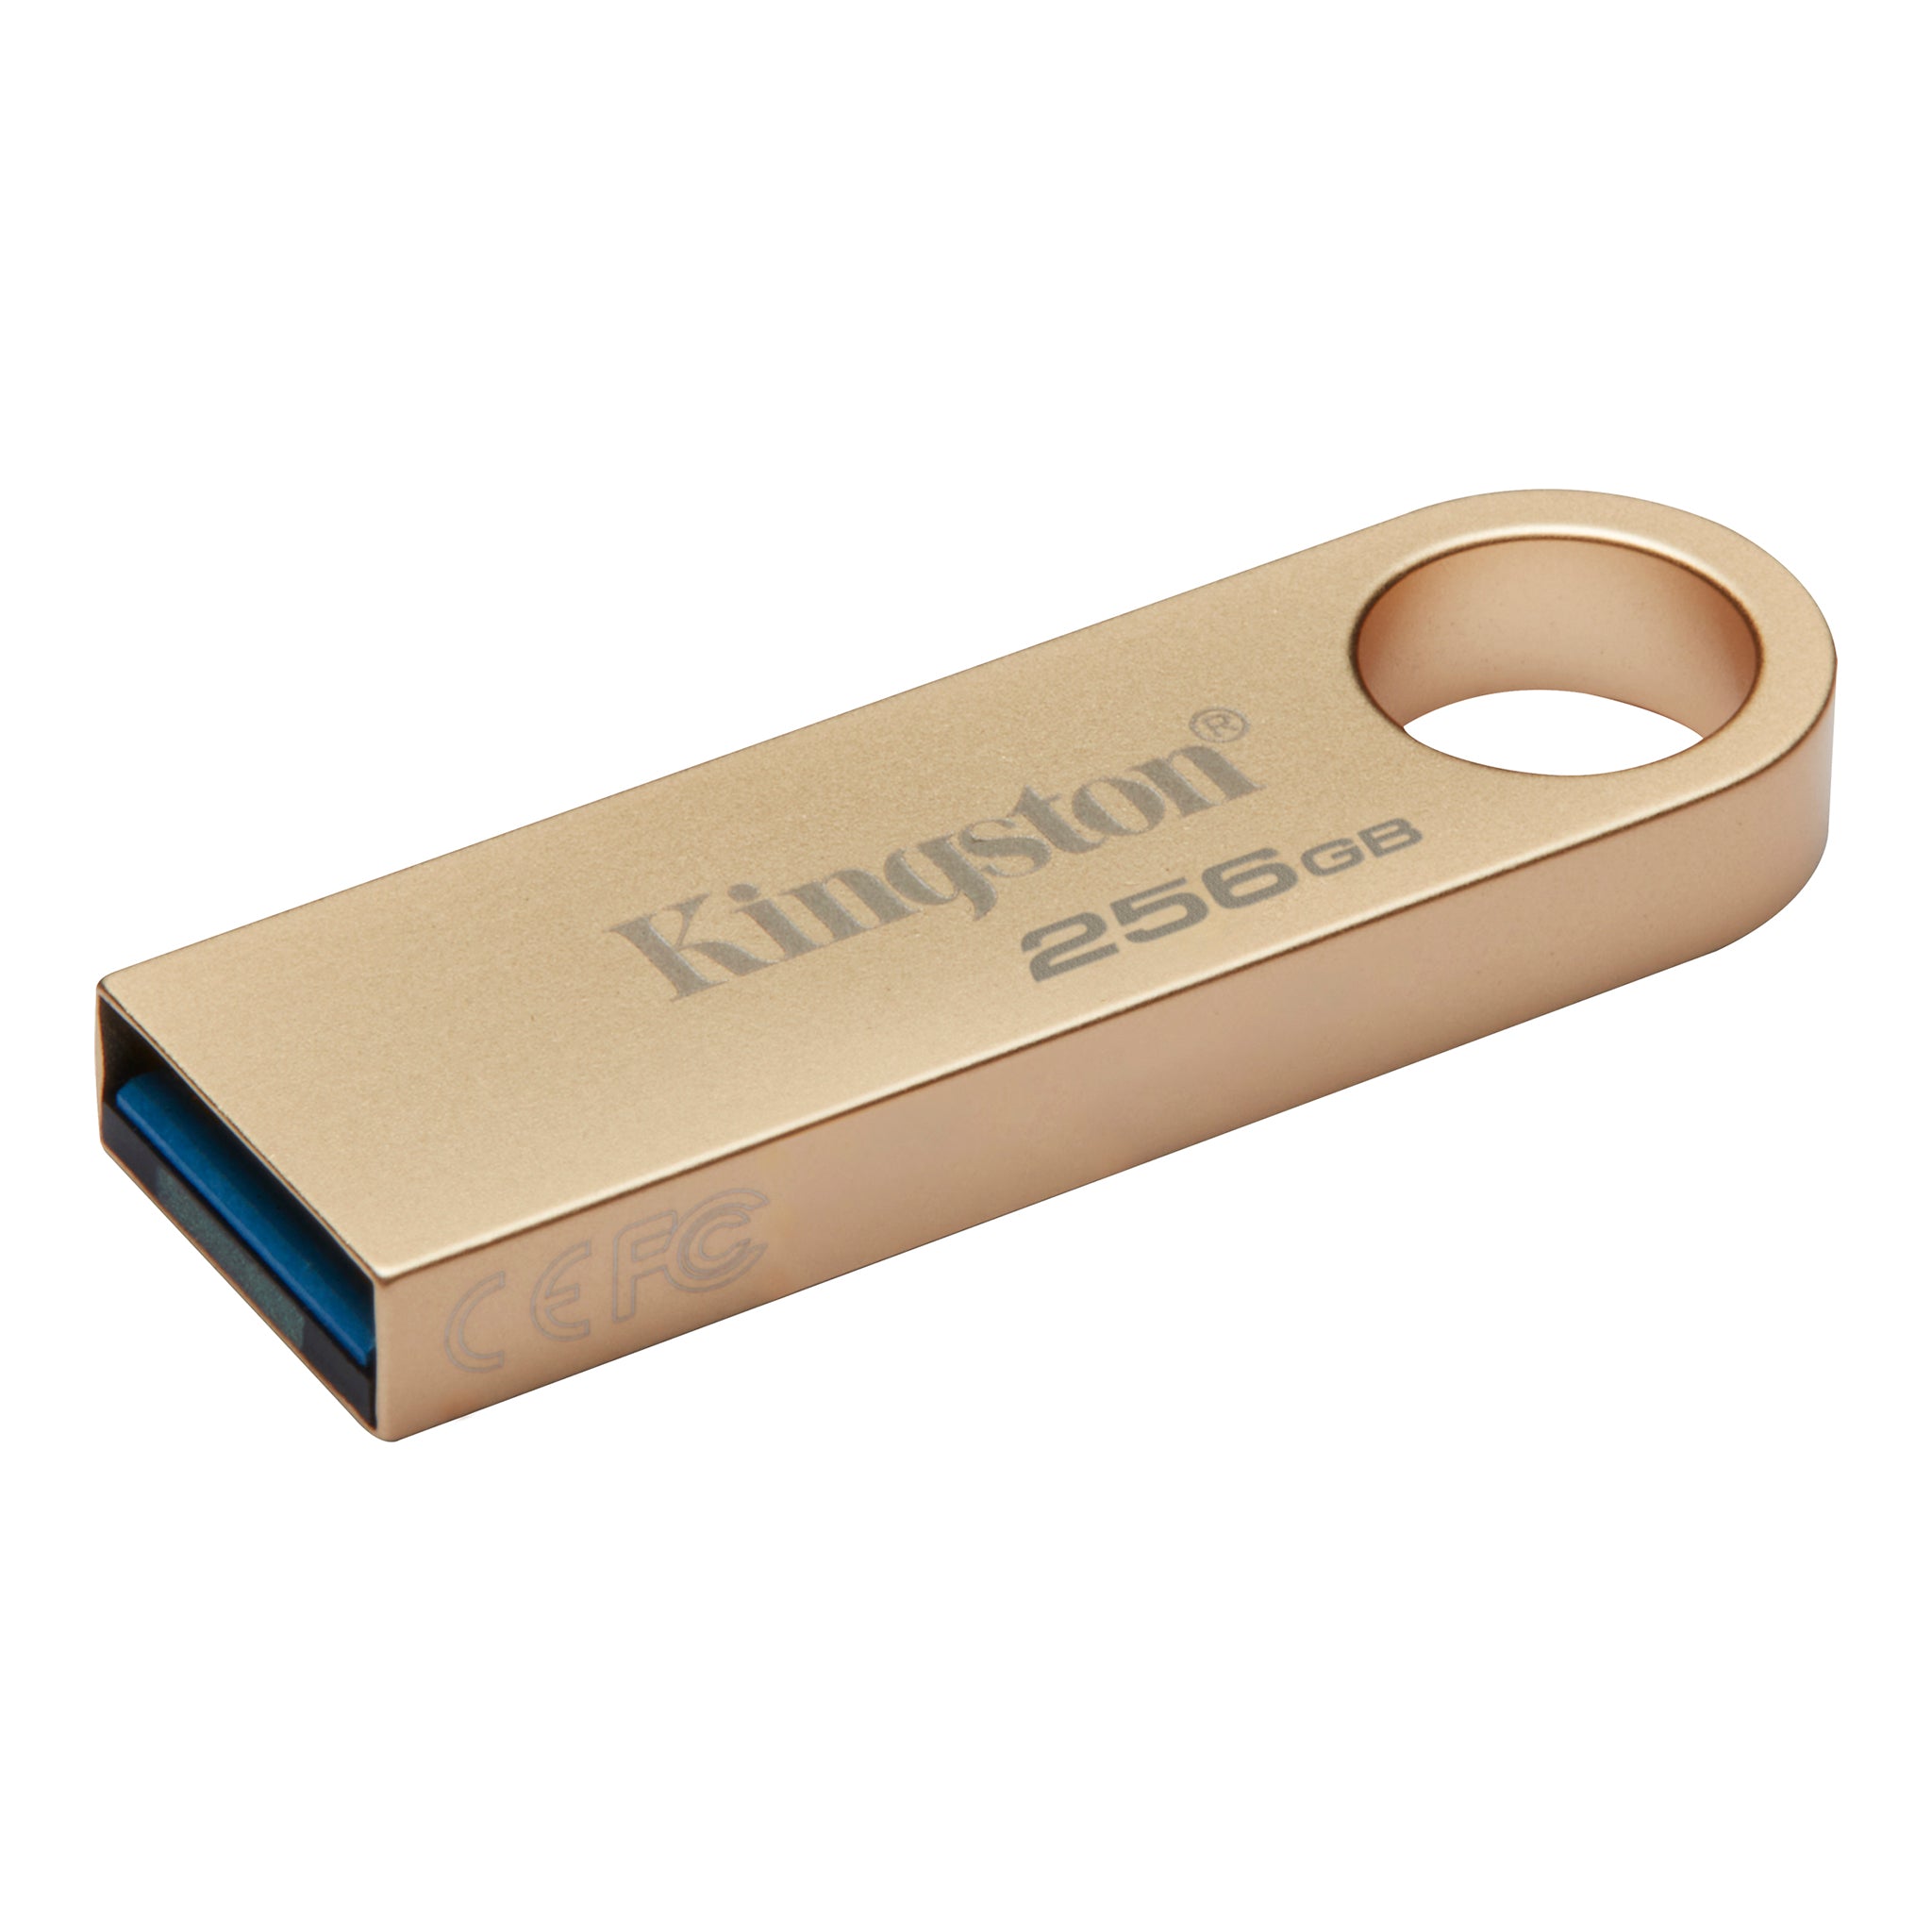 Kingston 256GB 220MB/s Metal USB 3.2 Gen 1 DataTraveler SE9 G3